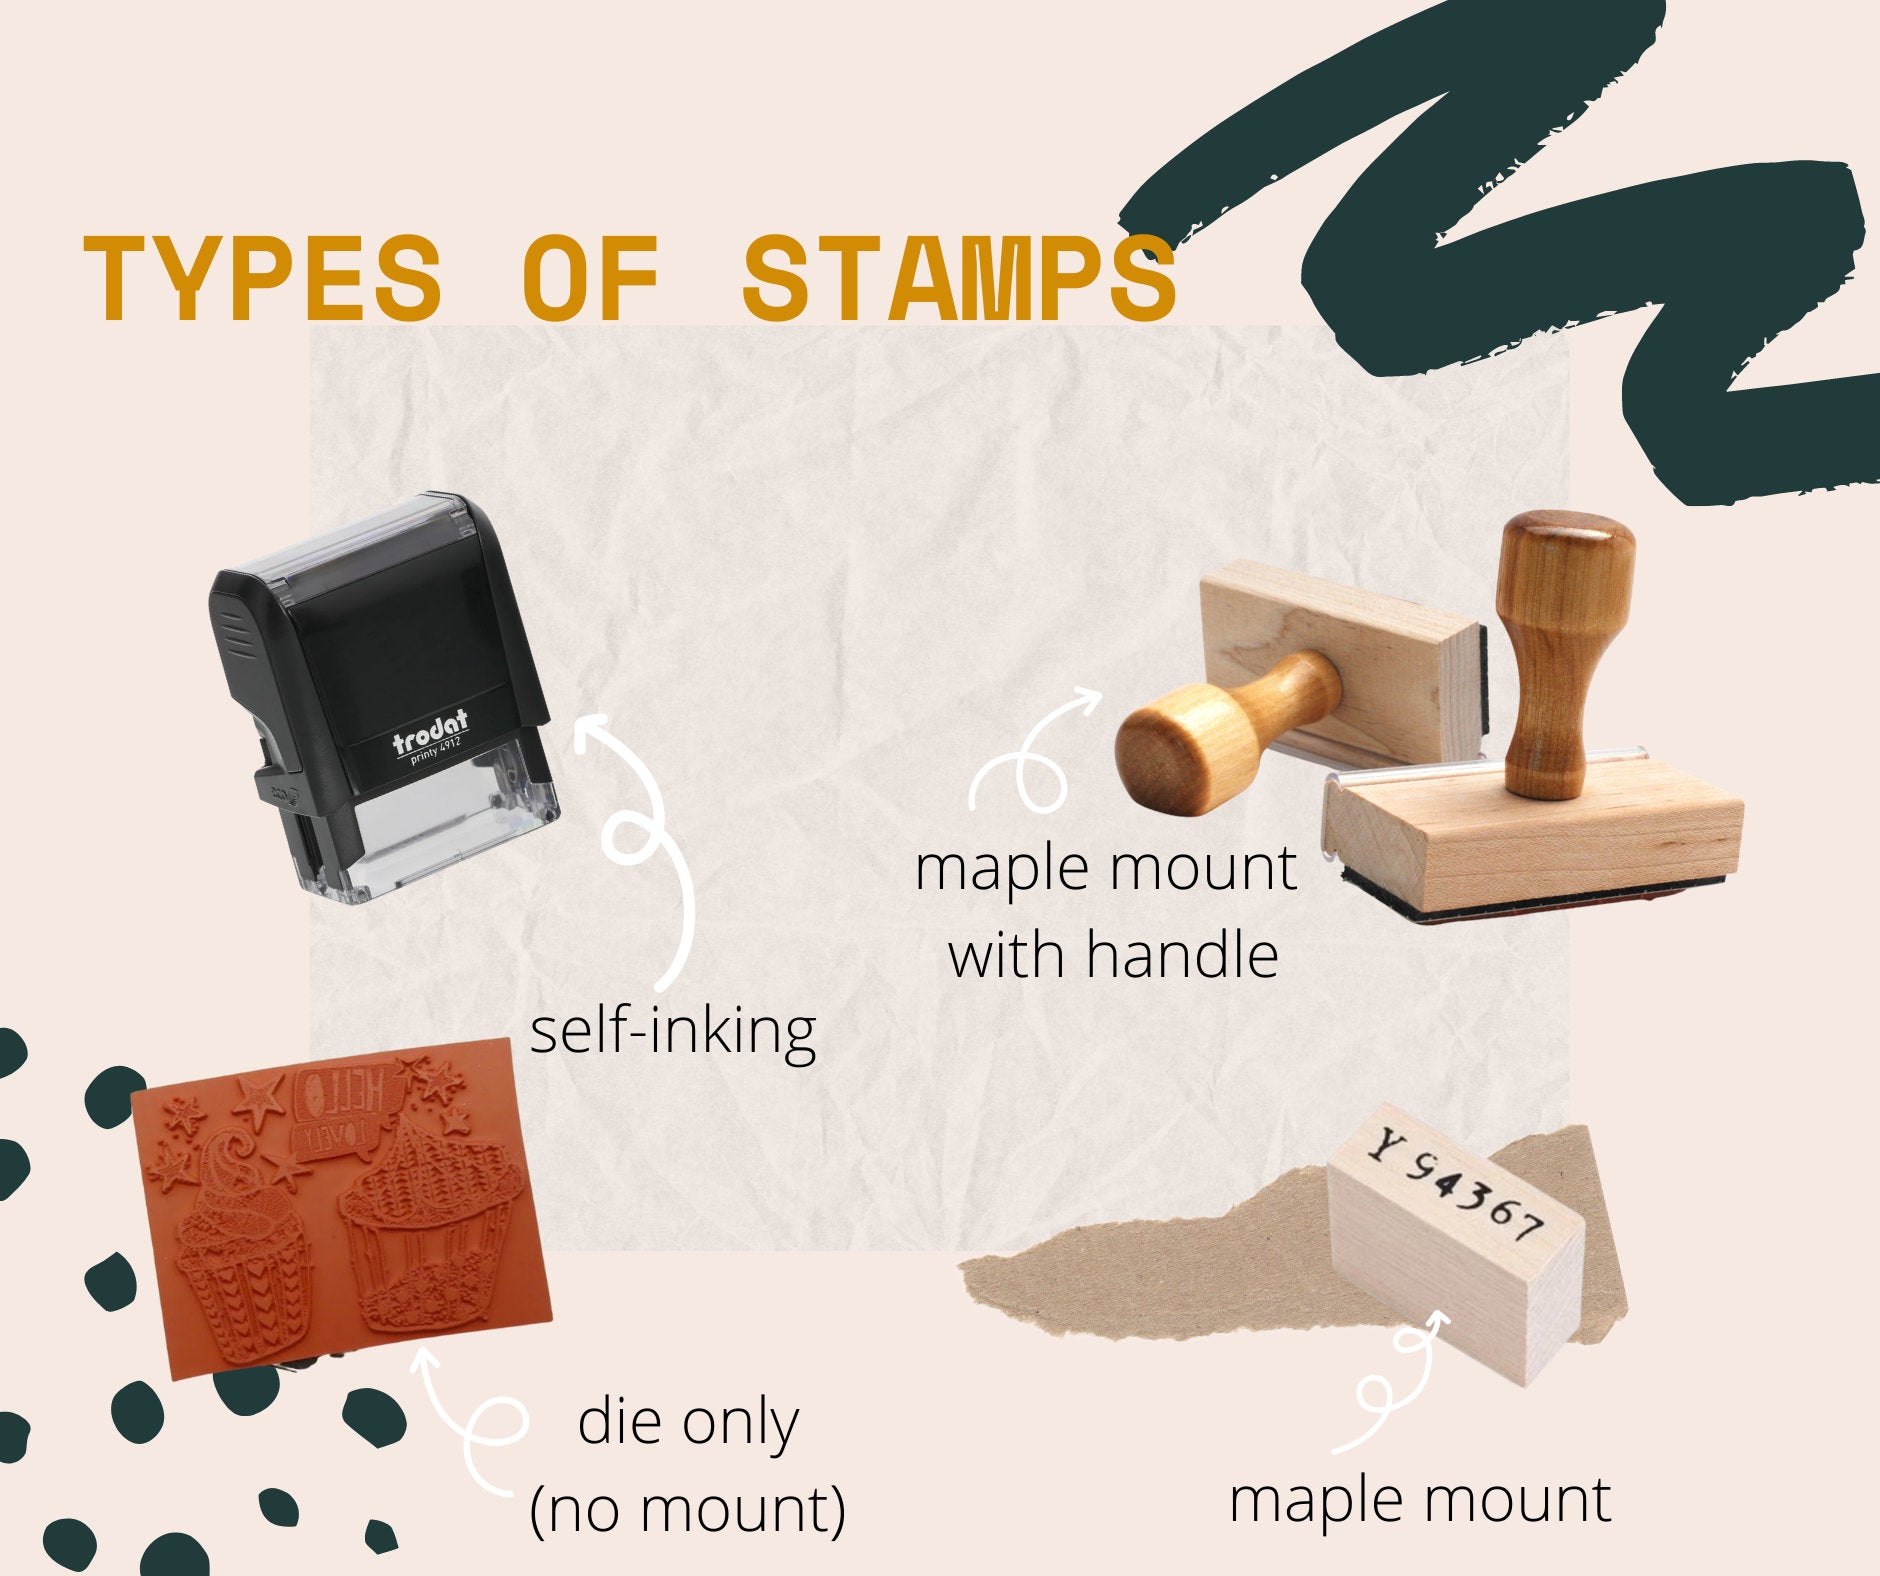 Custom Logo Stamps